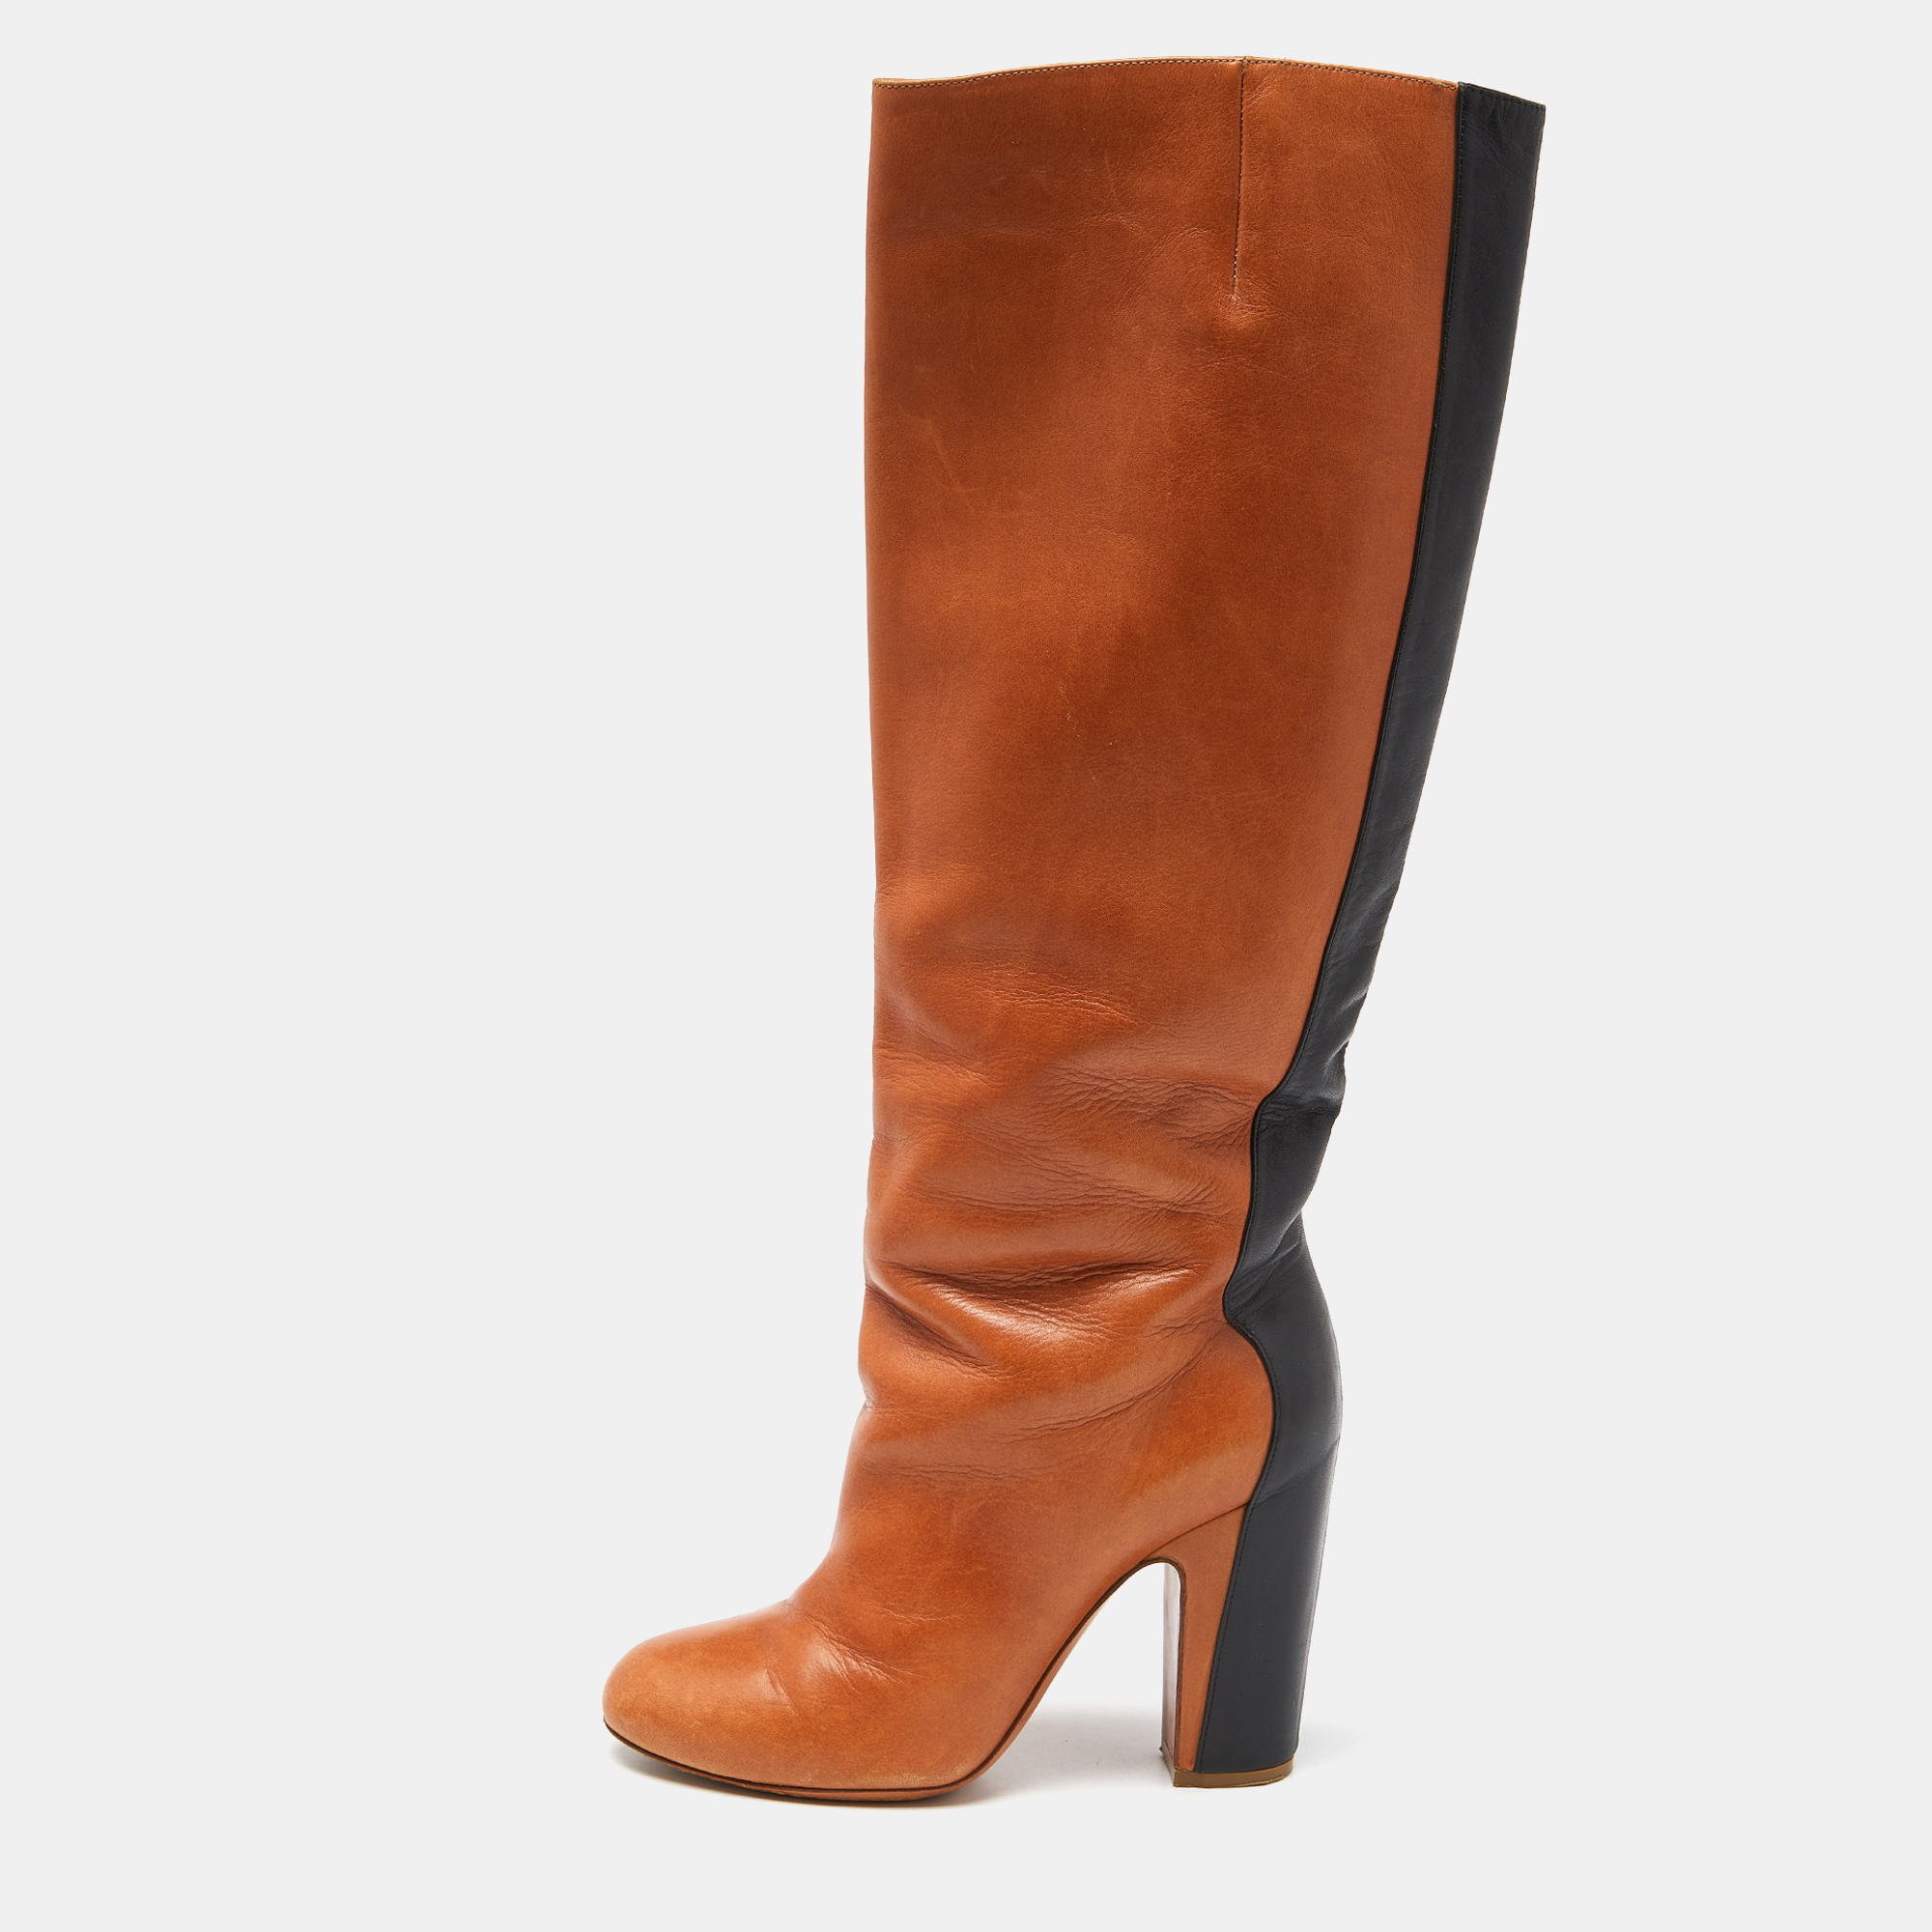 Maison martin margiela brown/black leather knee length block heel boots size 40